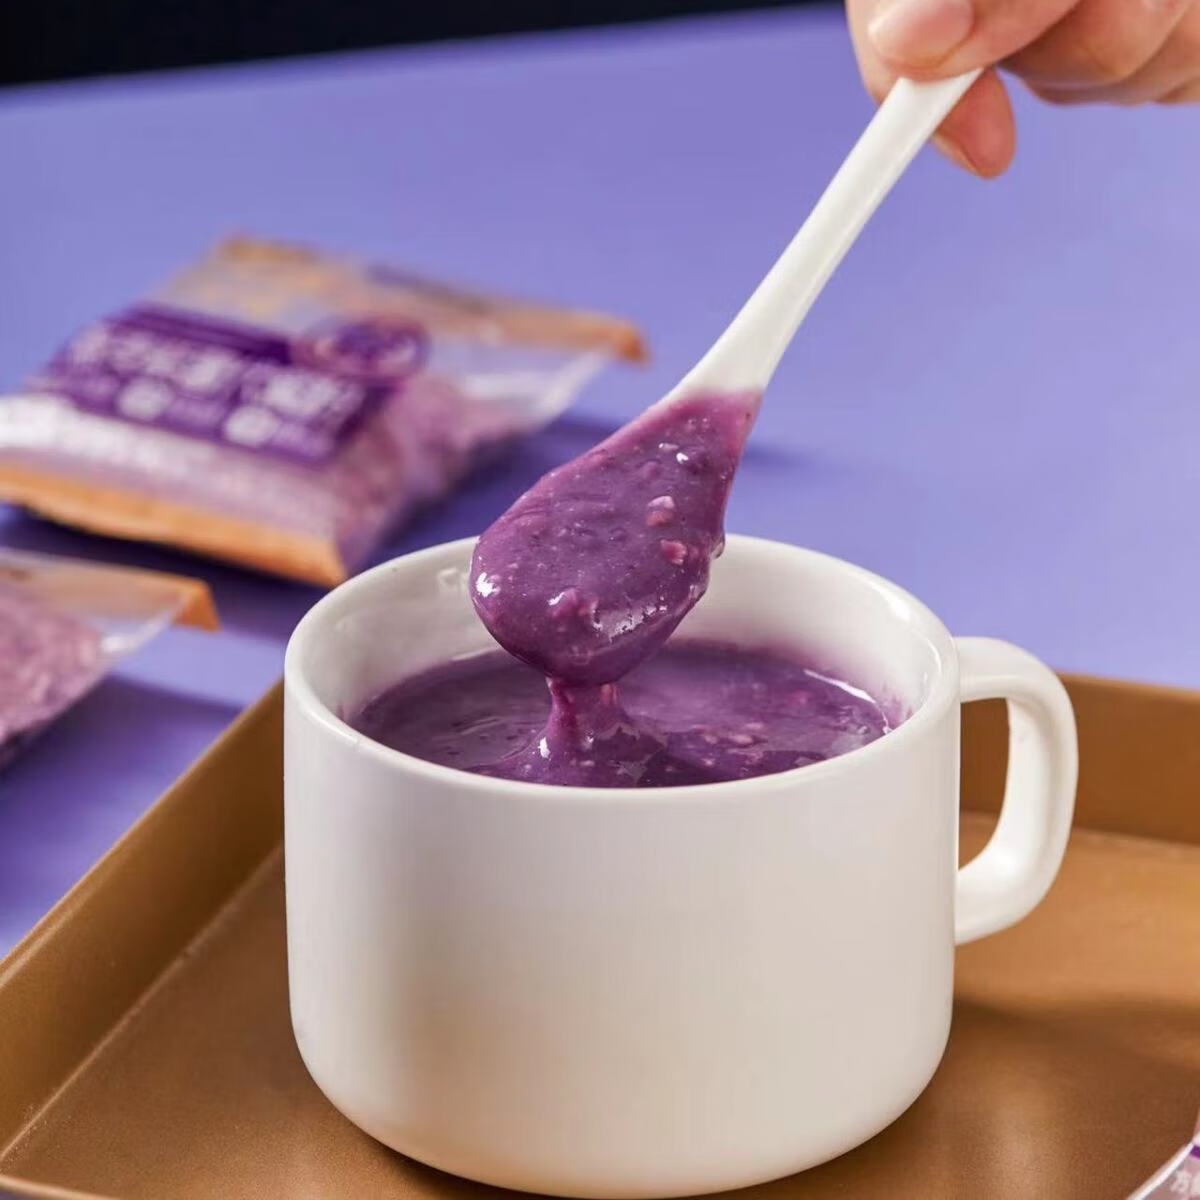 Derenruyu魔芋紫薯粉速溶冲饮即食早餐代餐紫薯独立包装零食 10包【约500g】 魔芋紫薯代餐粉